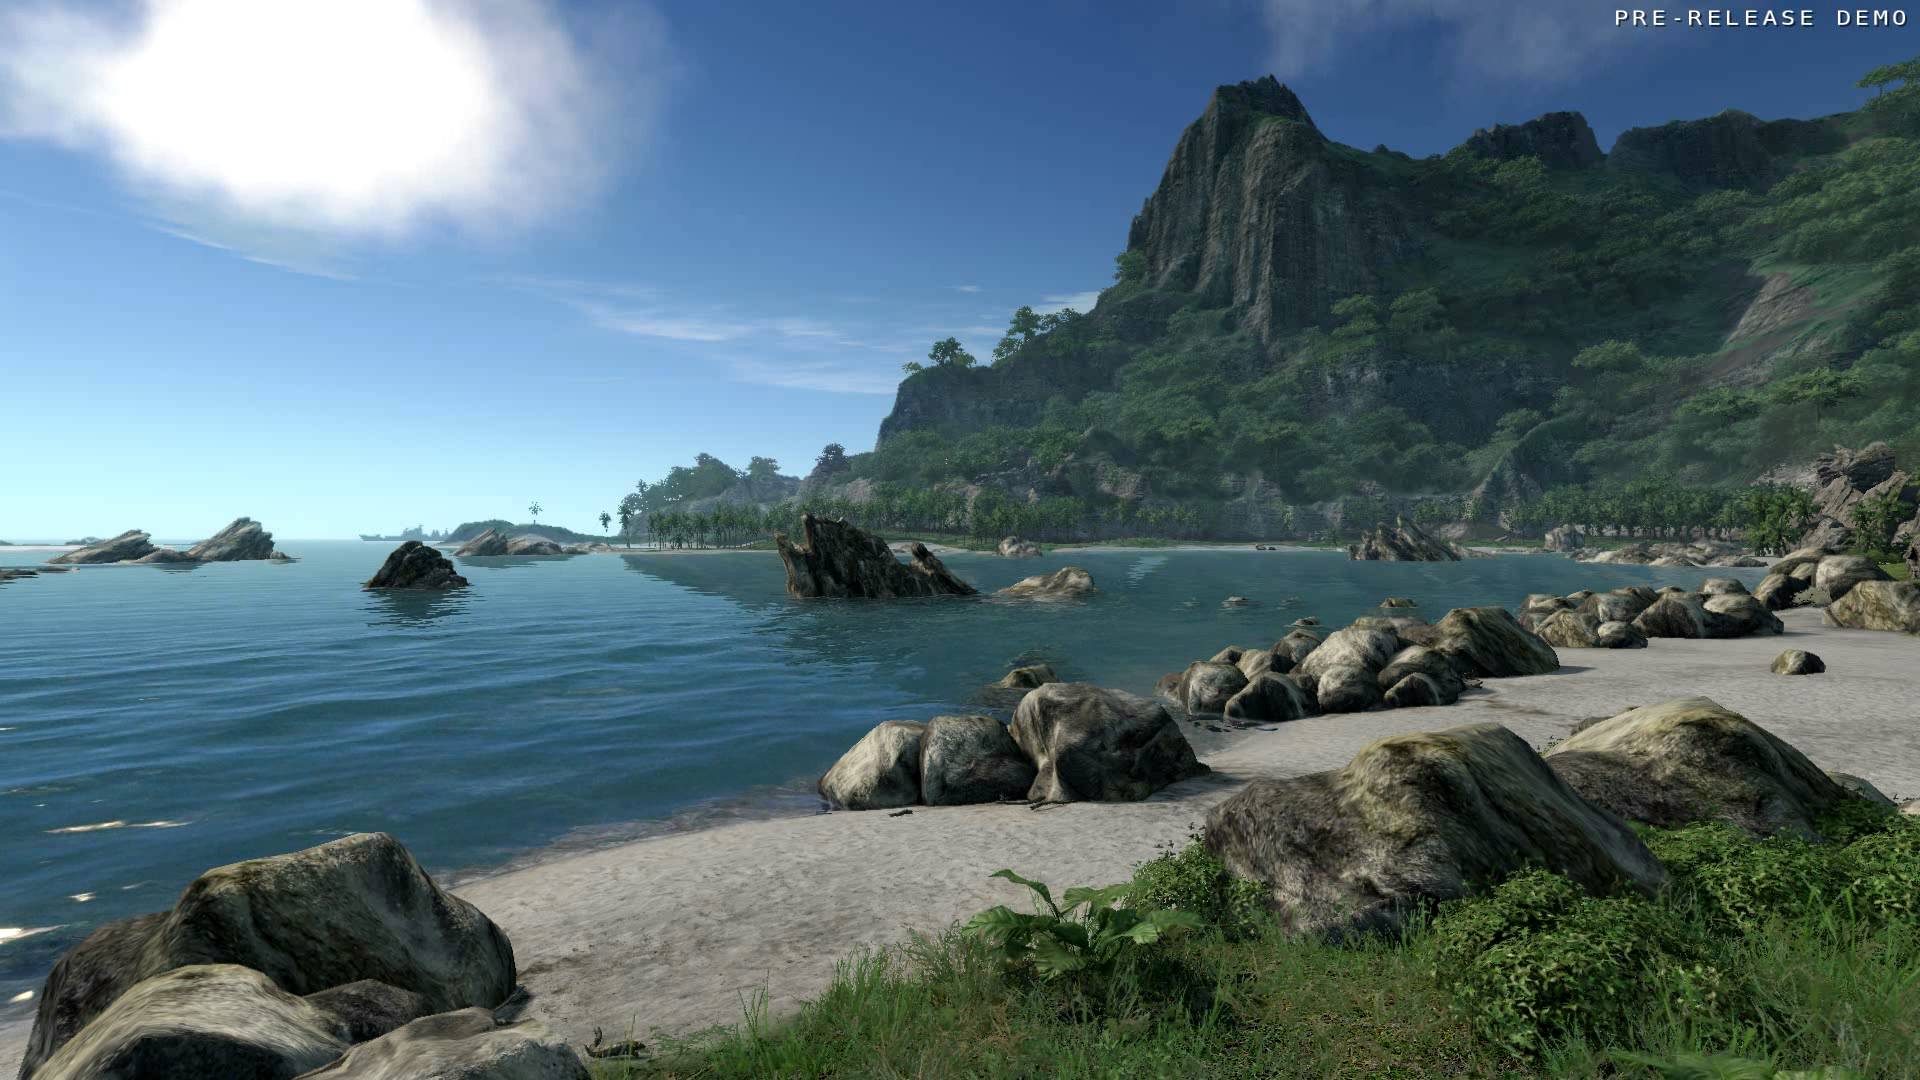  Live Wallpaper]   Crysis   Beach 1b 1080p   Dual Monitor